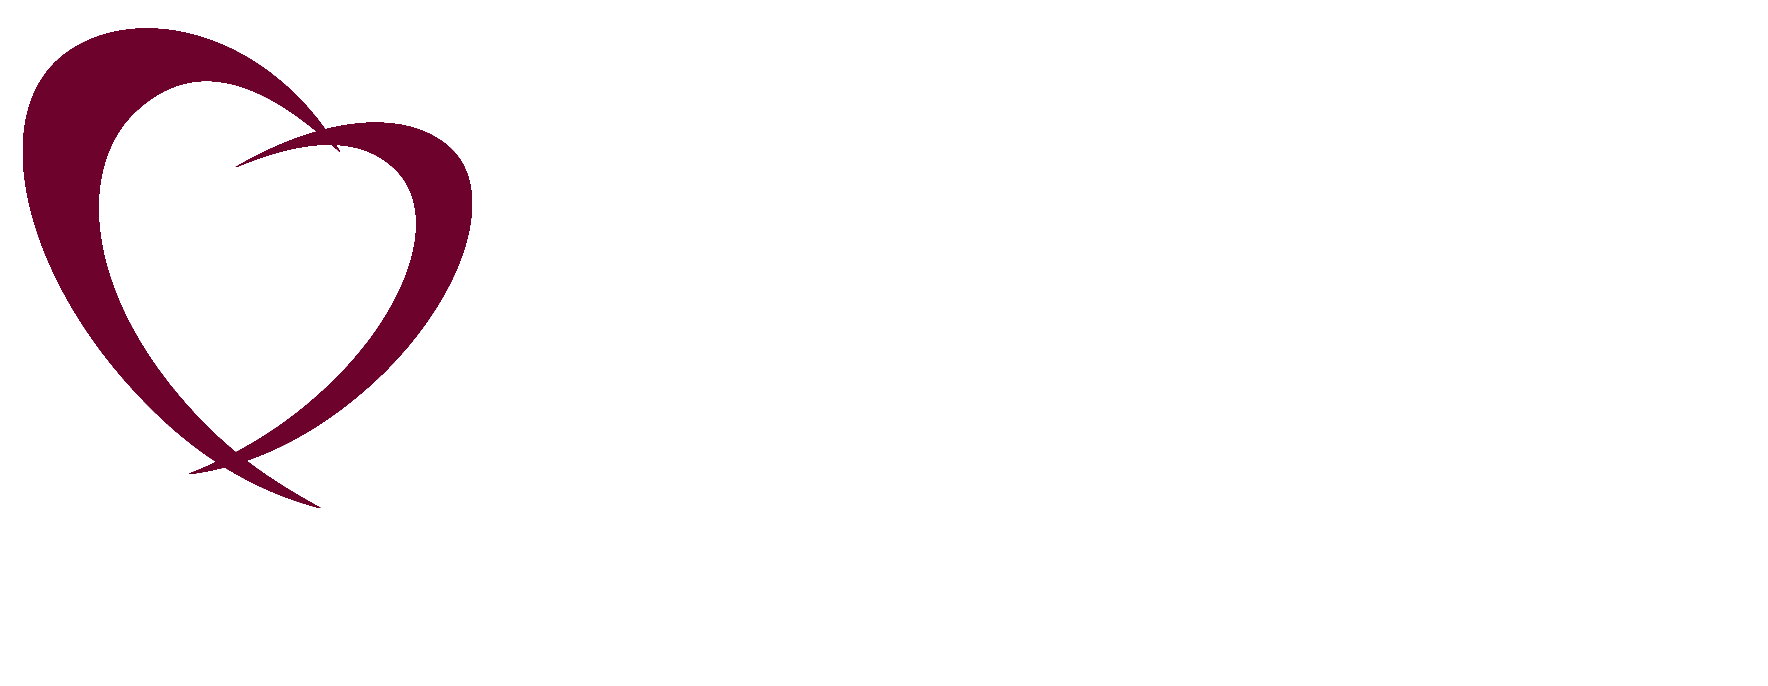 Cardiology Consultants of Atlanta, GA | Cardiologist Decatur, Lithonia ...